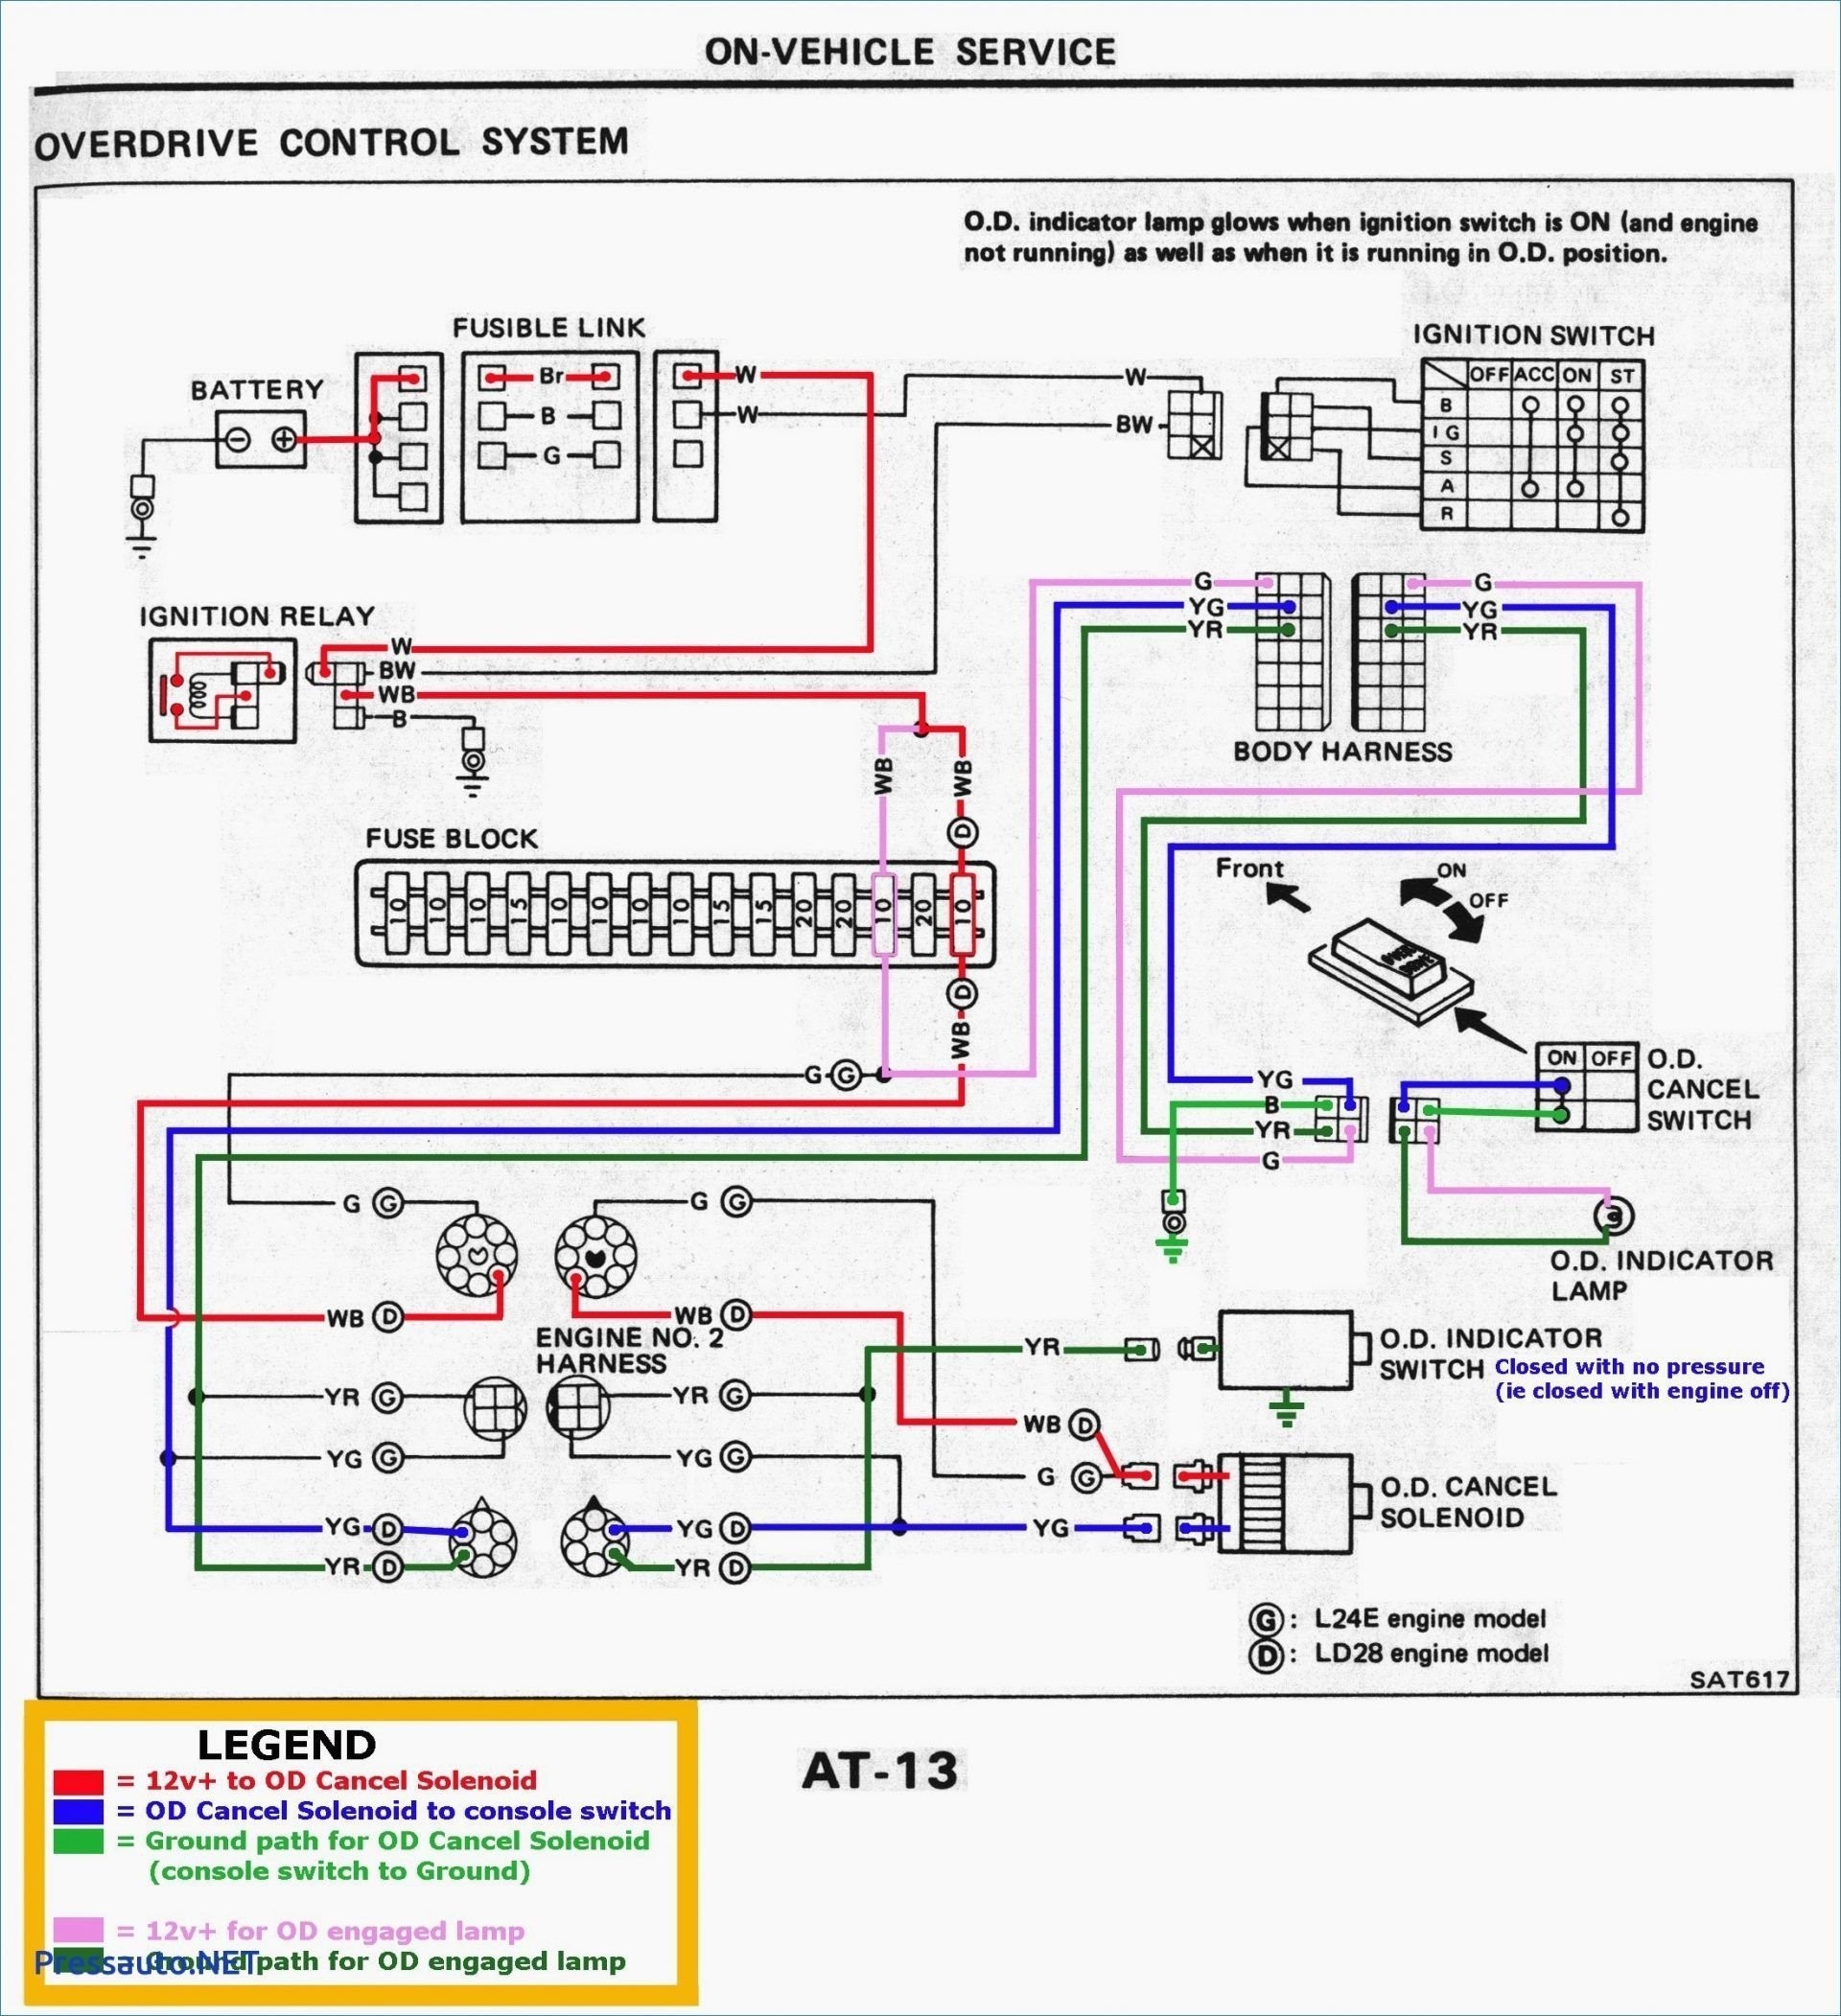 kib pcbm2 wiring diagram unique micro thermostat wiring diagram free picture wiring diagram user of kib pcbm2 wiring diagram